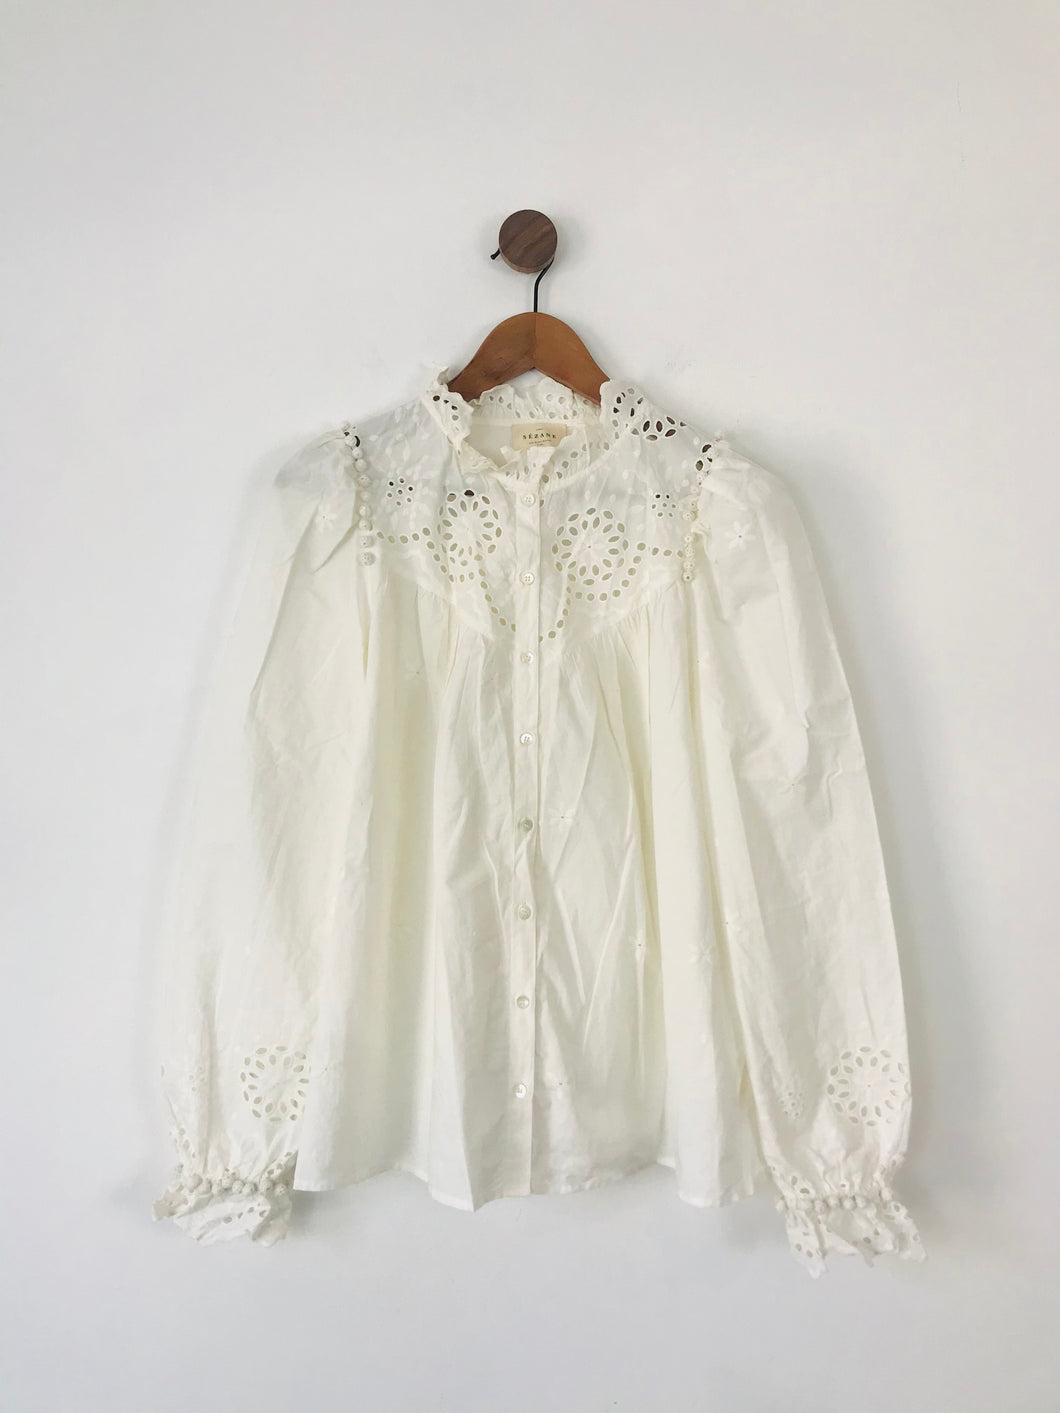 Sézane Women’s Embroidered Button Up Shirt | 38 UK10 | White